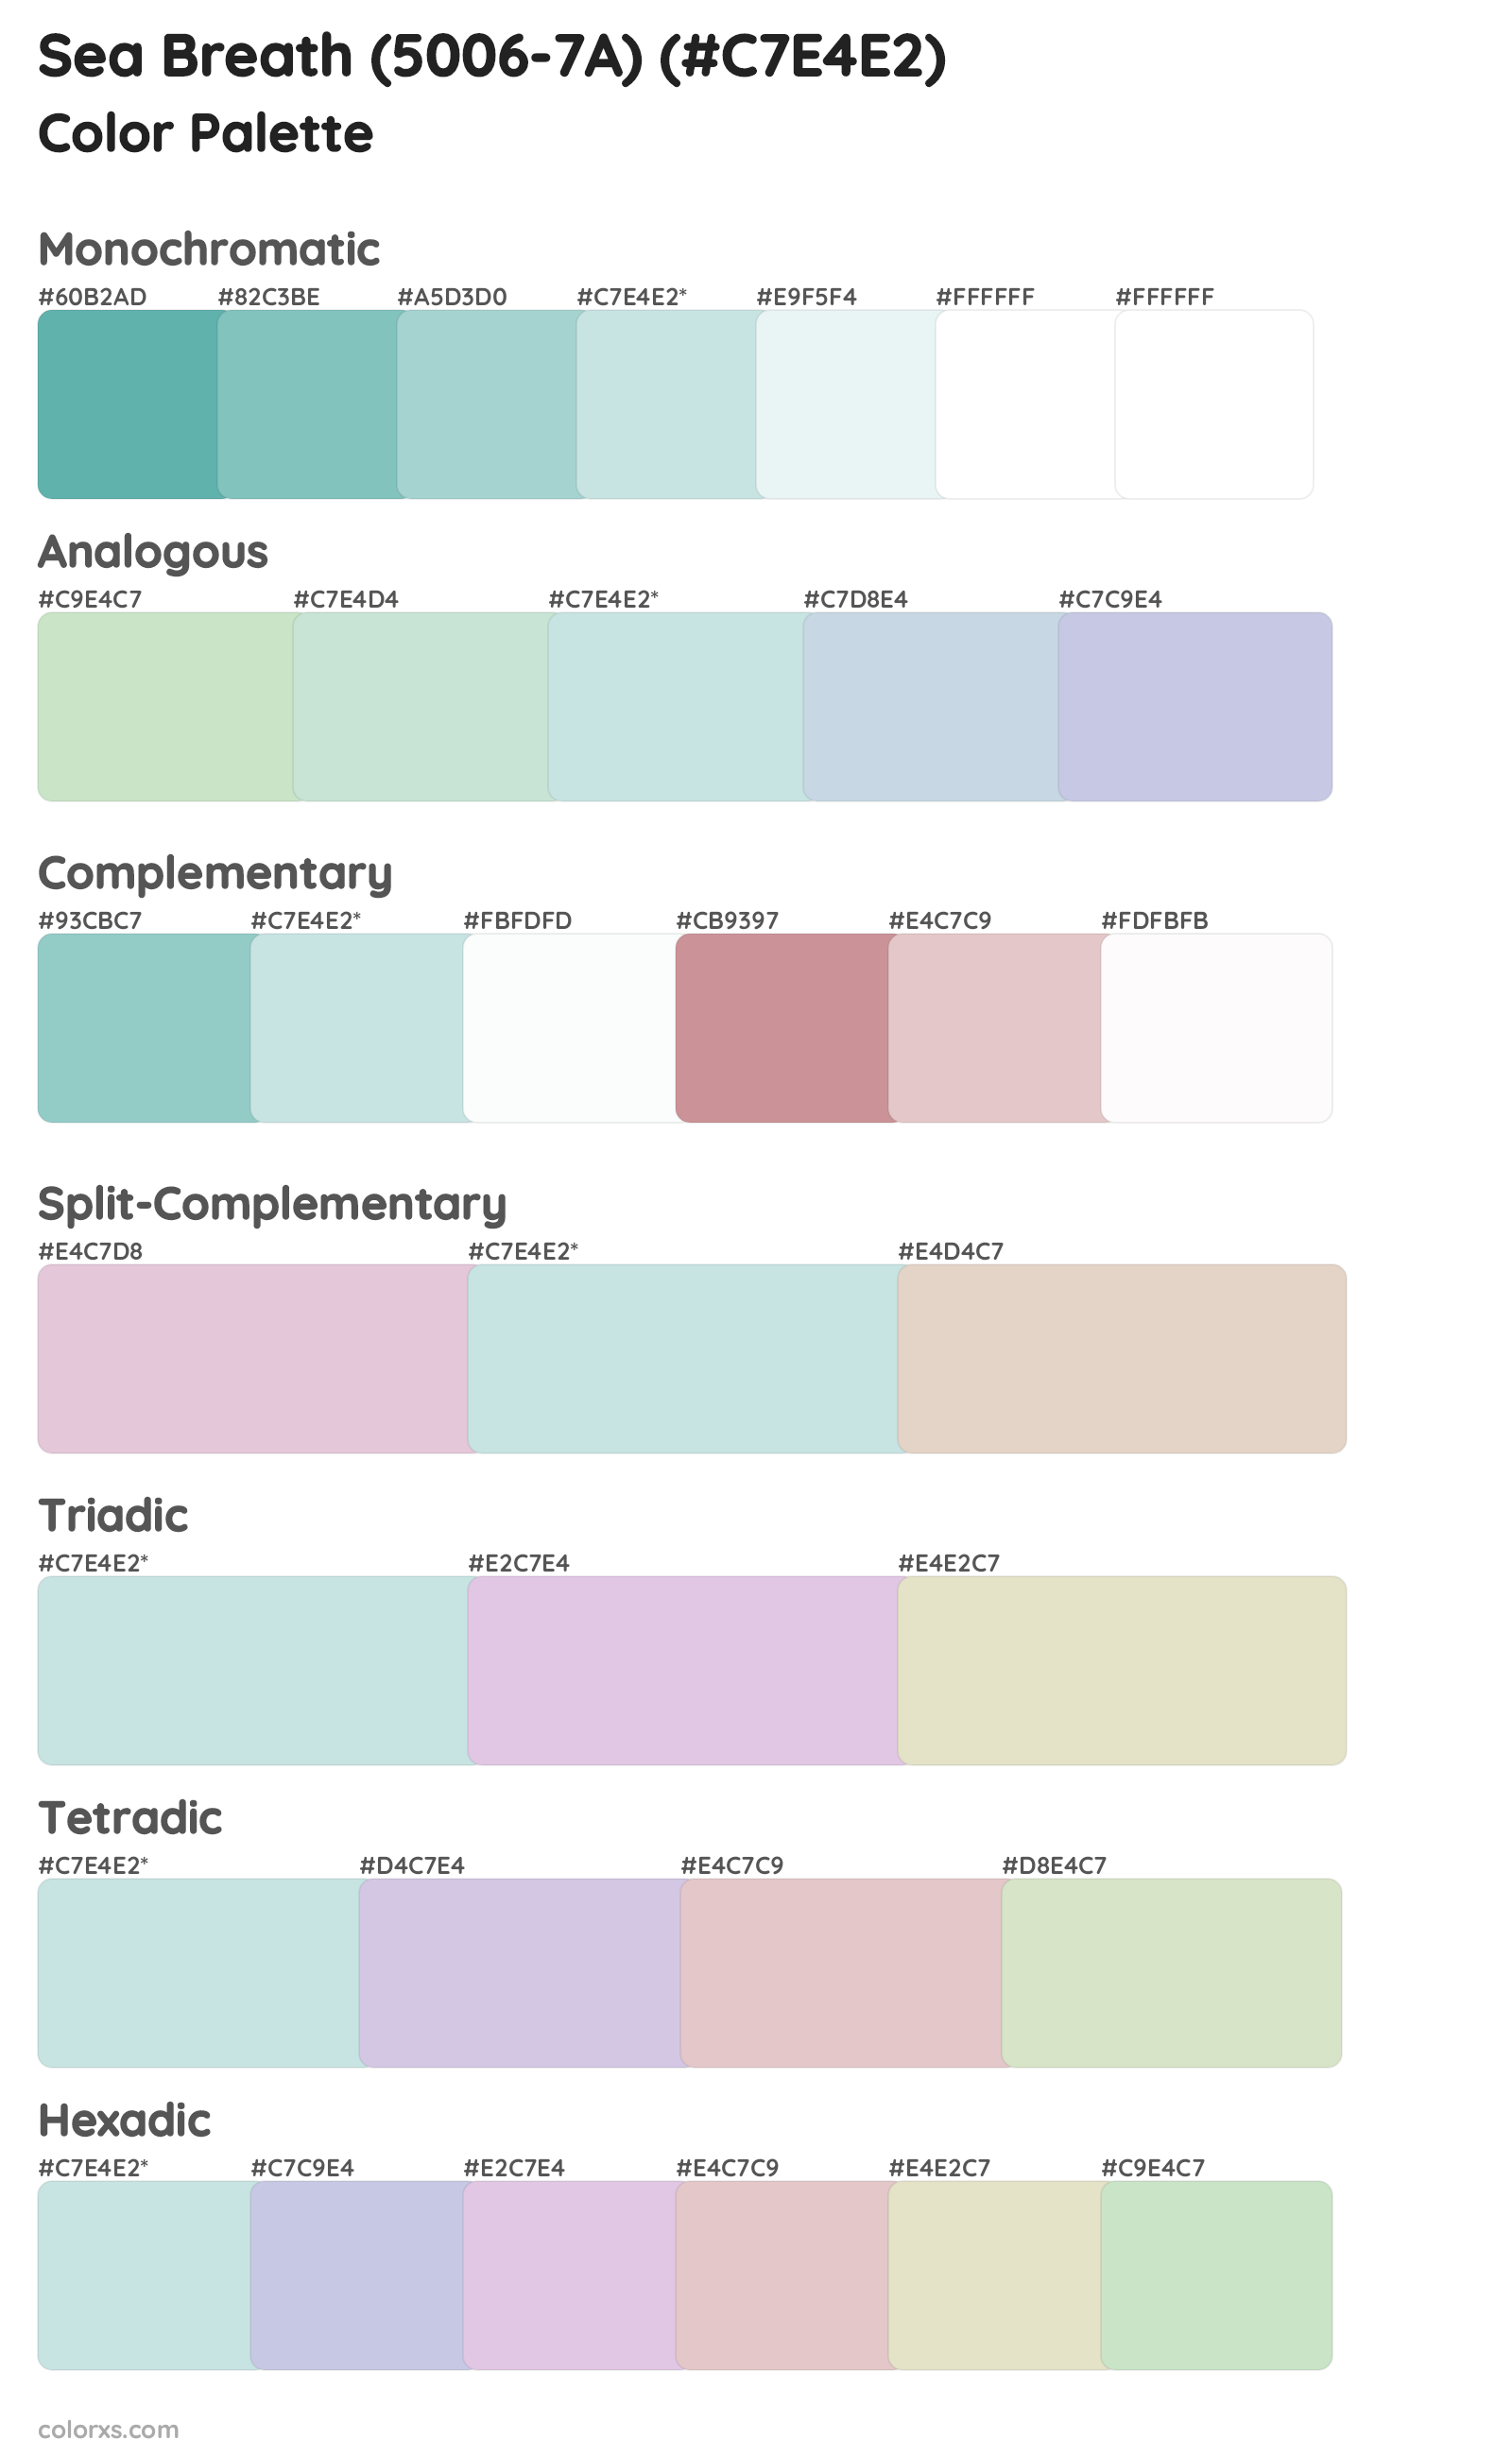 Sea Breath (5006-7A) Color Scheme Palettes